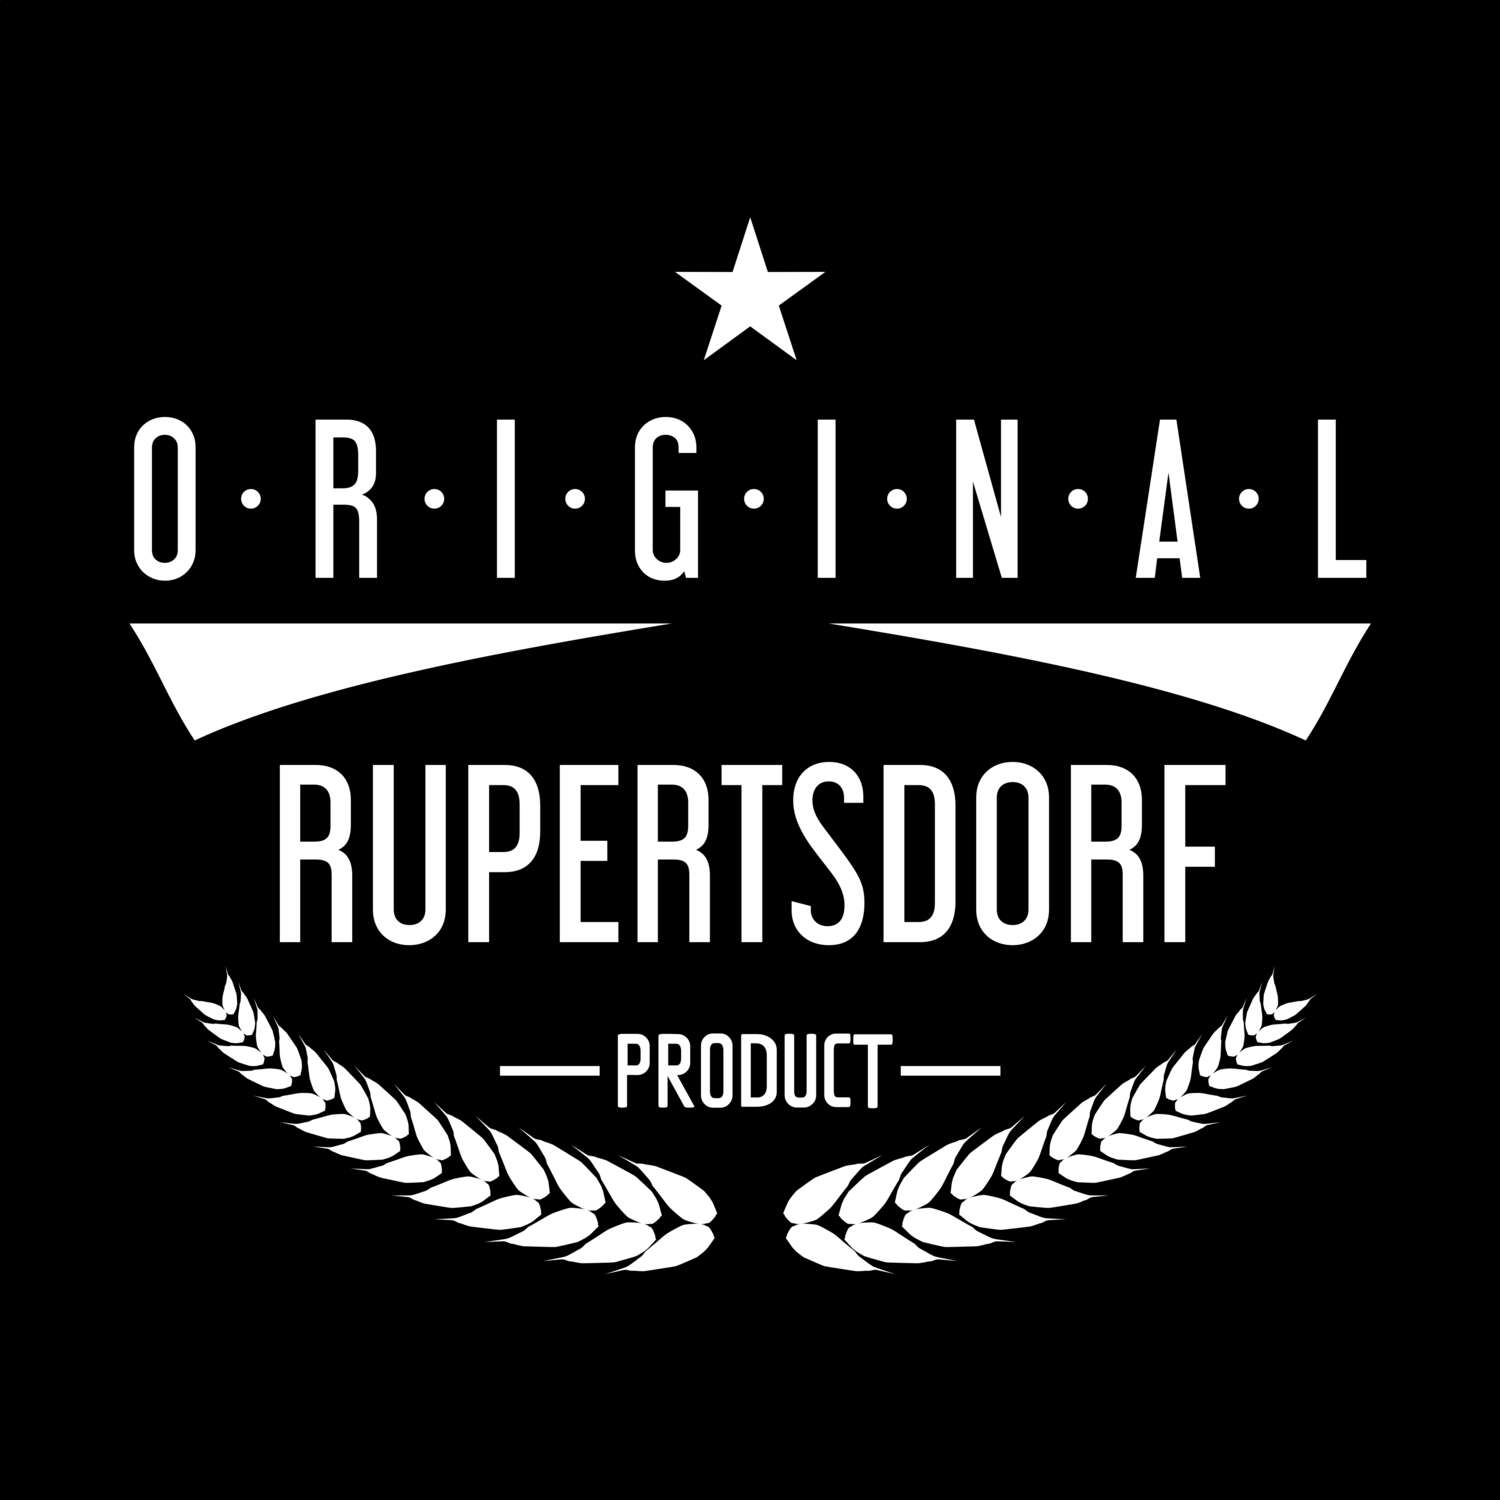 Rupertsdorf T-Shirt »Original Product«